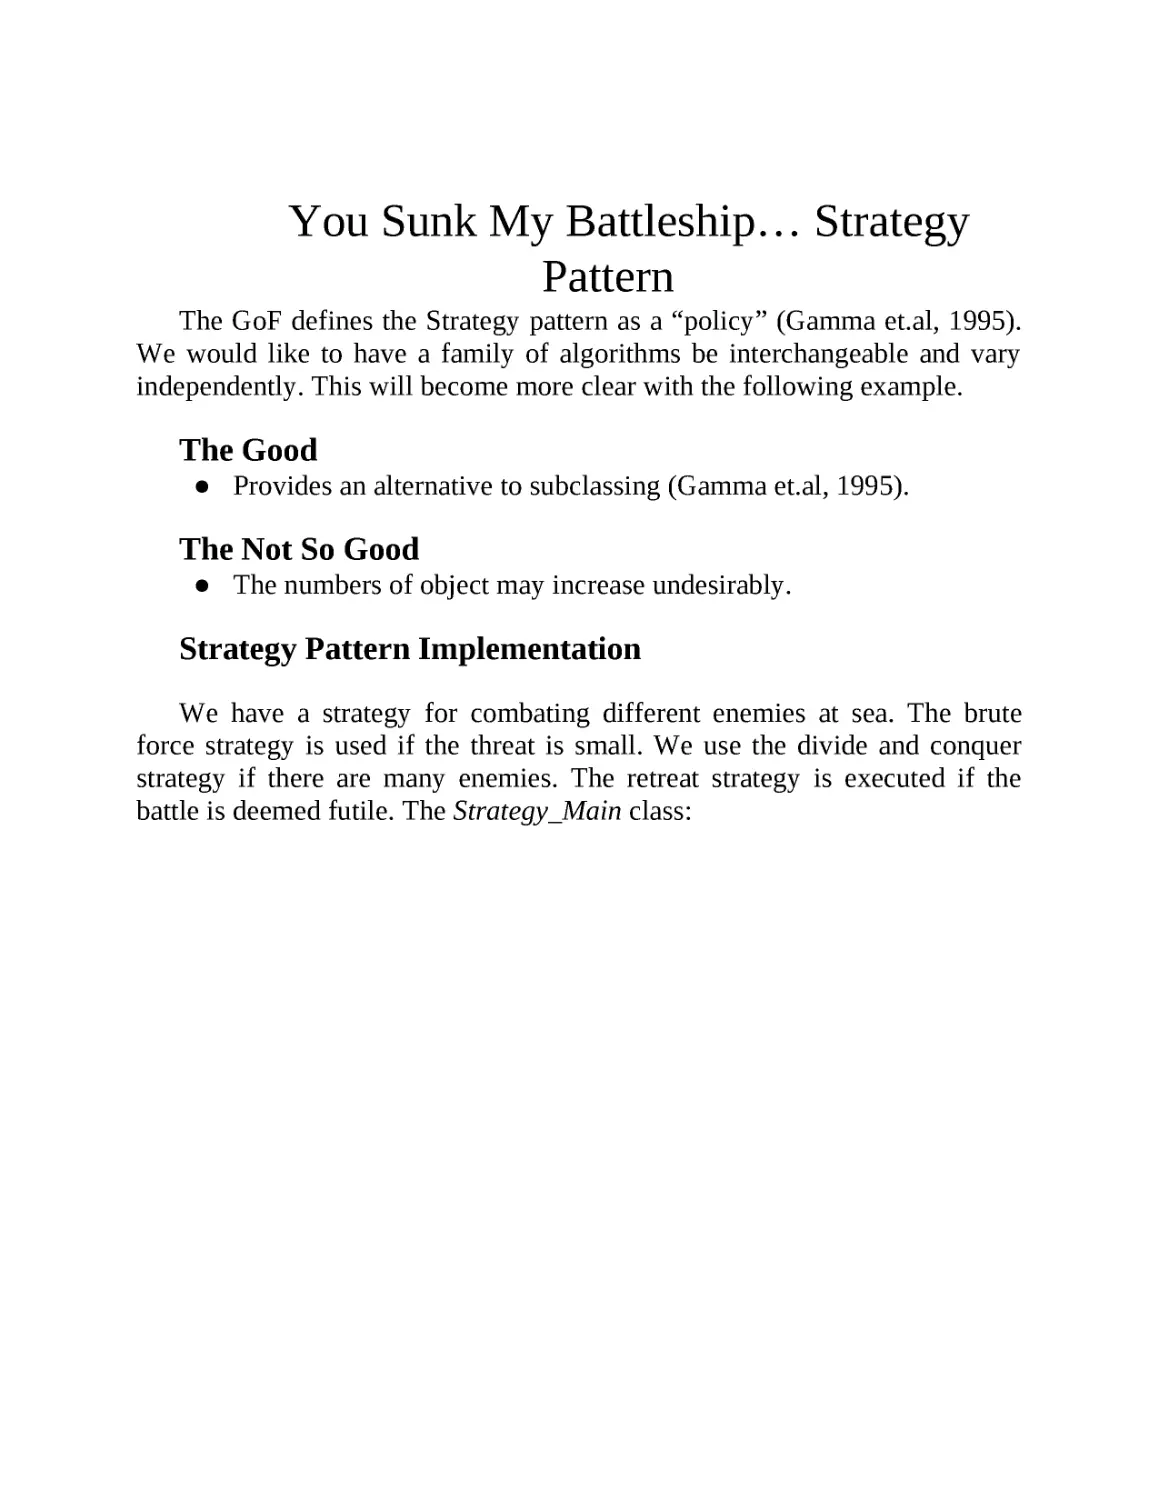 ﻿You Sunk My Battleship… Strategy Patter